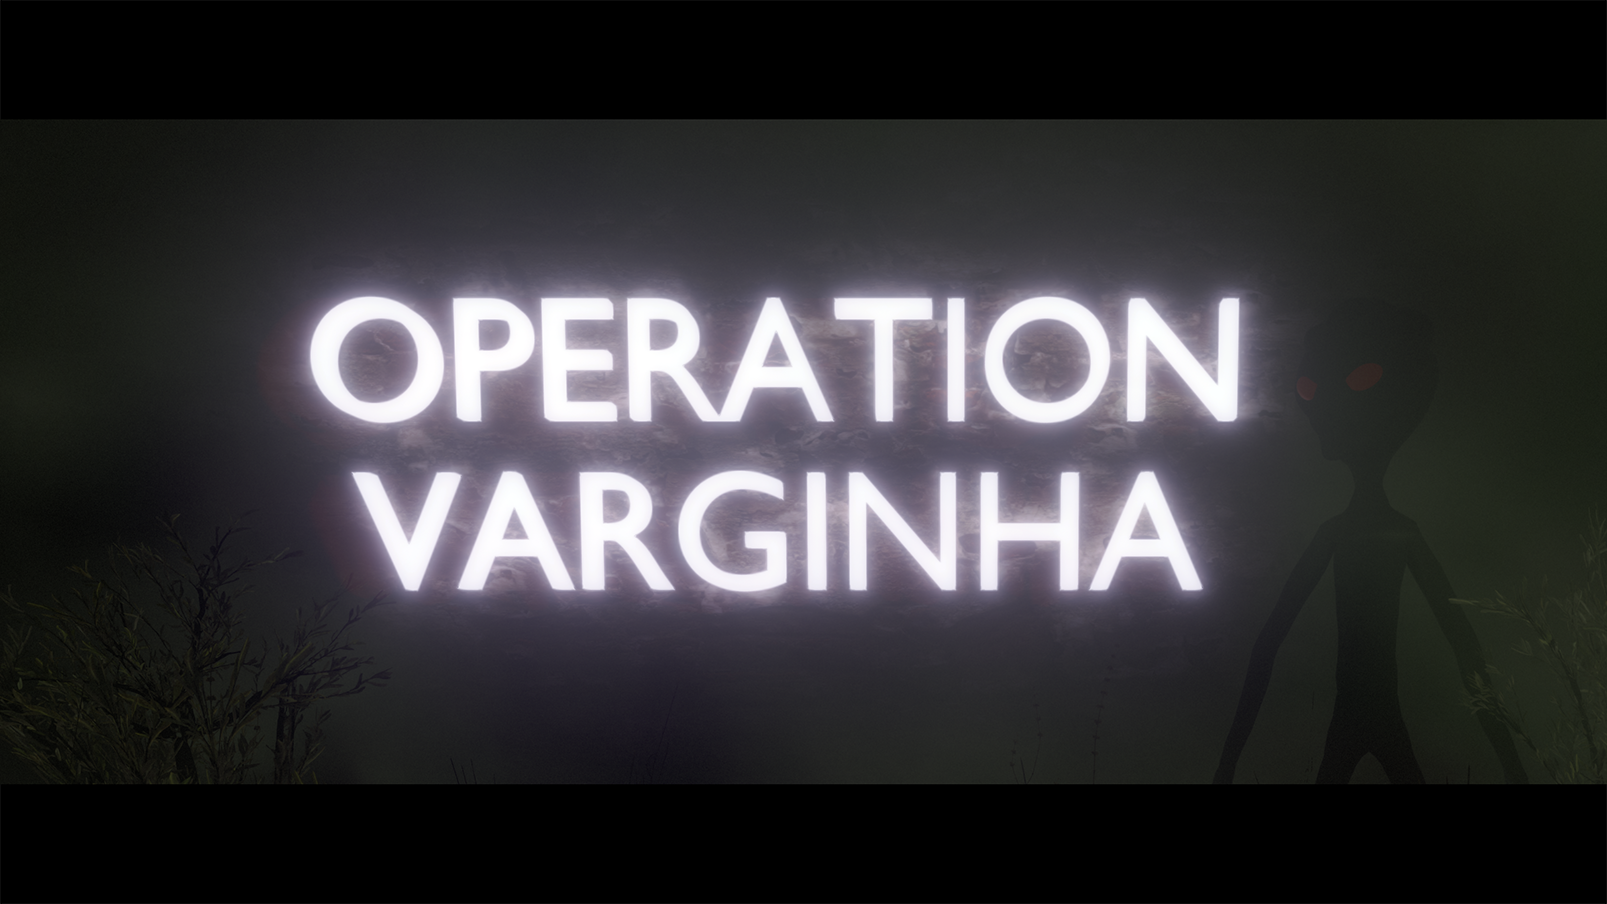 Operation Varginha